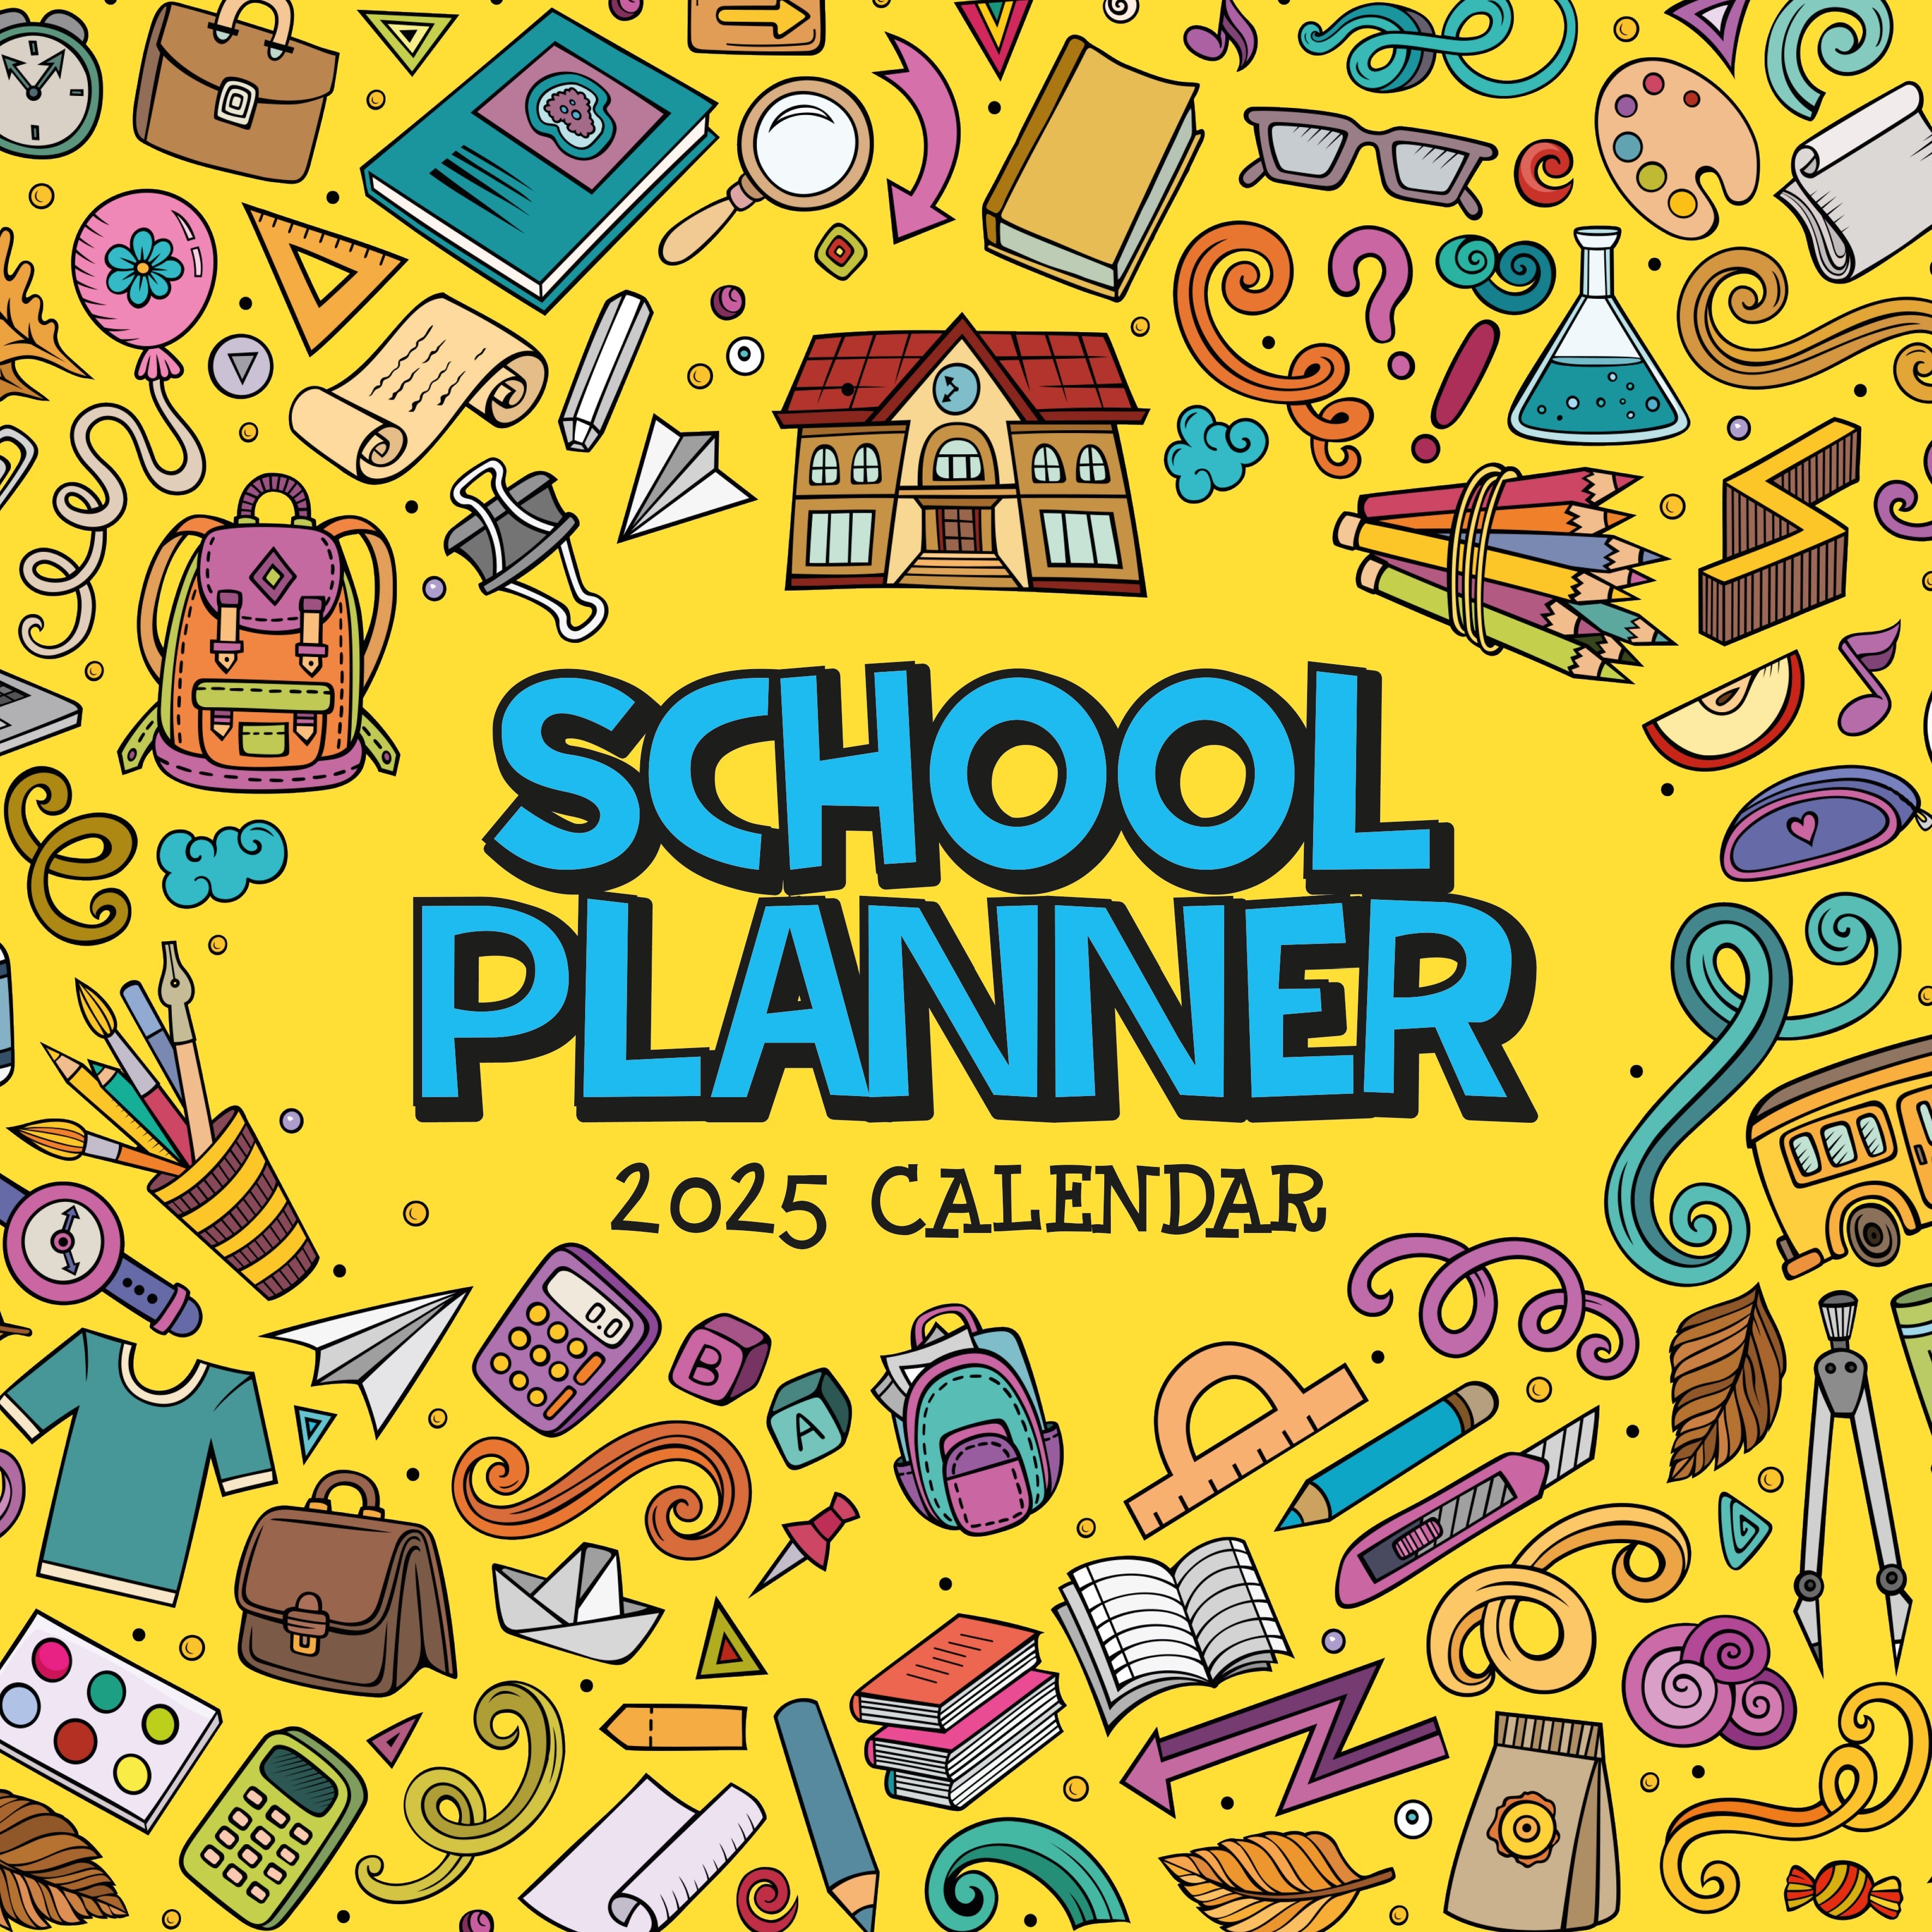 2025 School Planner - Square Wall Calendar